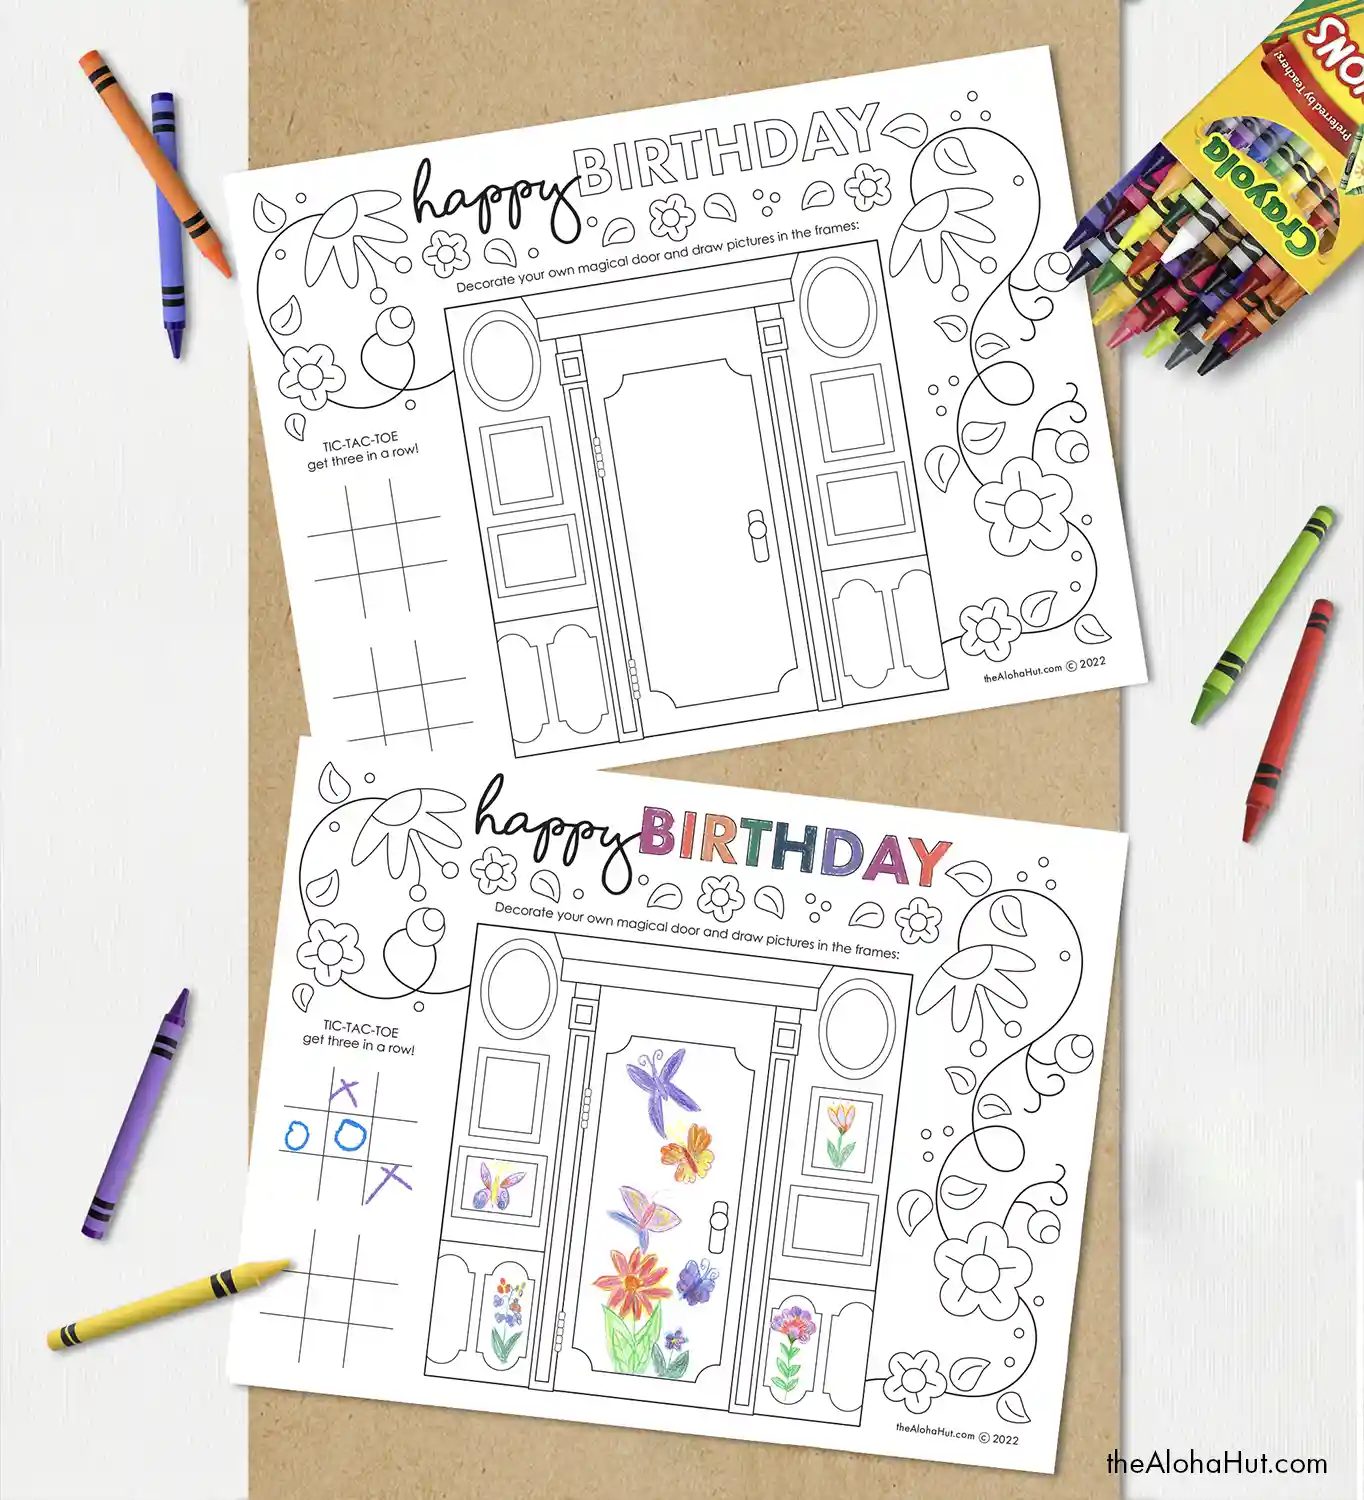 Encanto Party Ideas - placemat coloring page